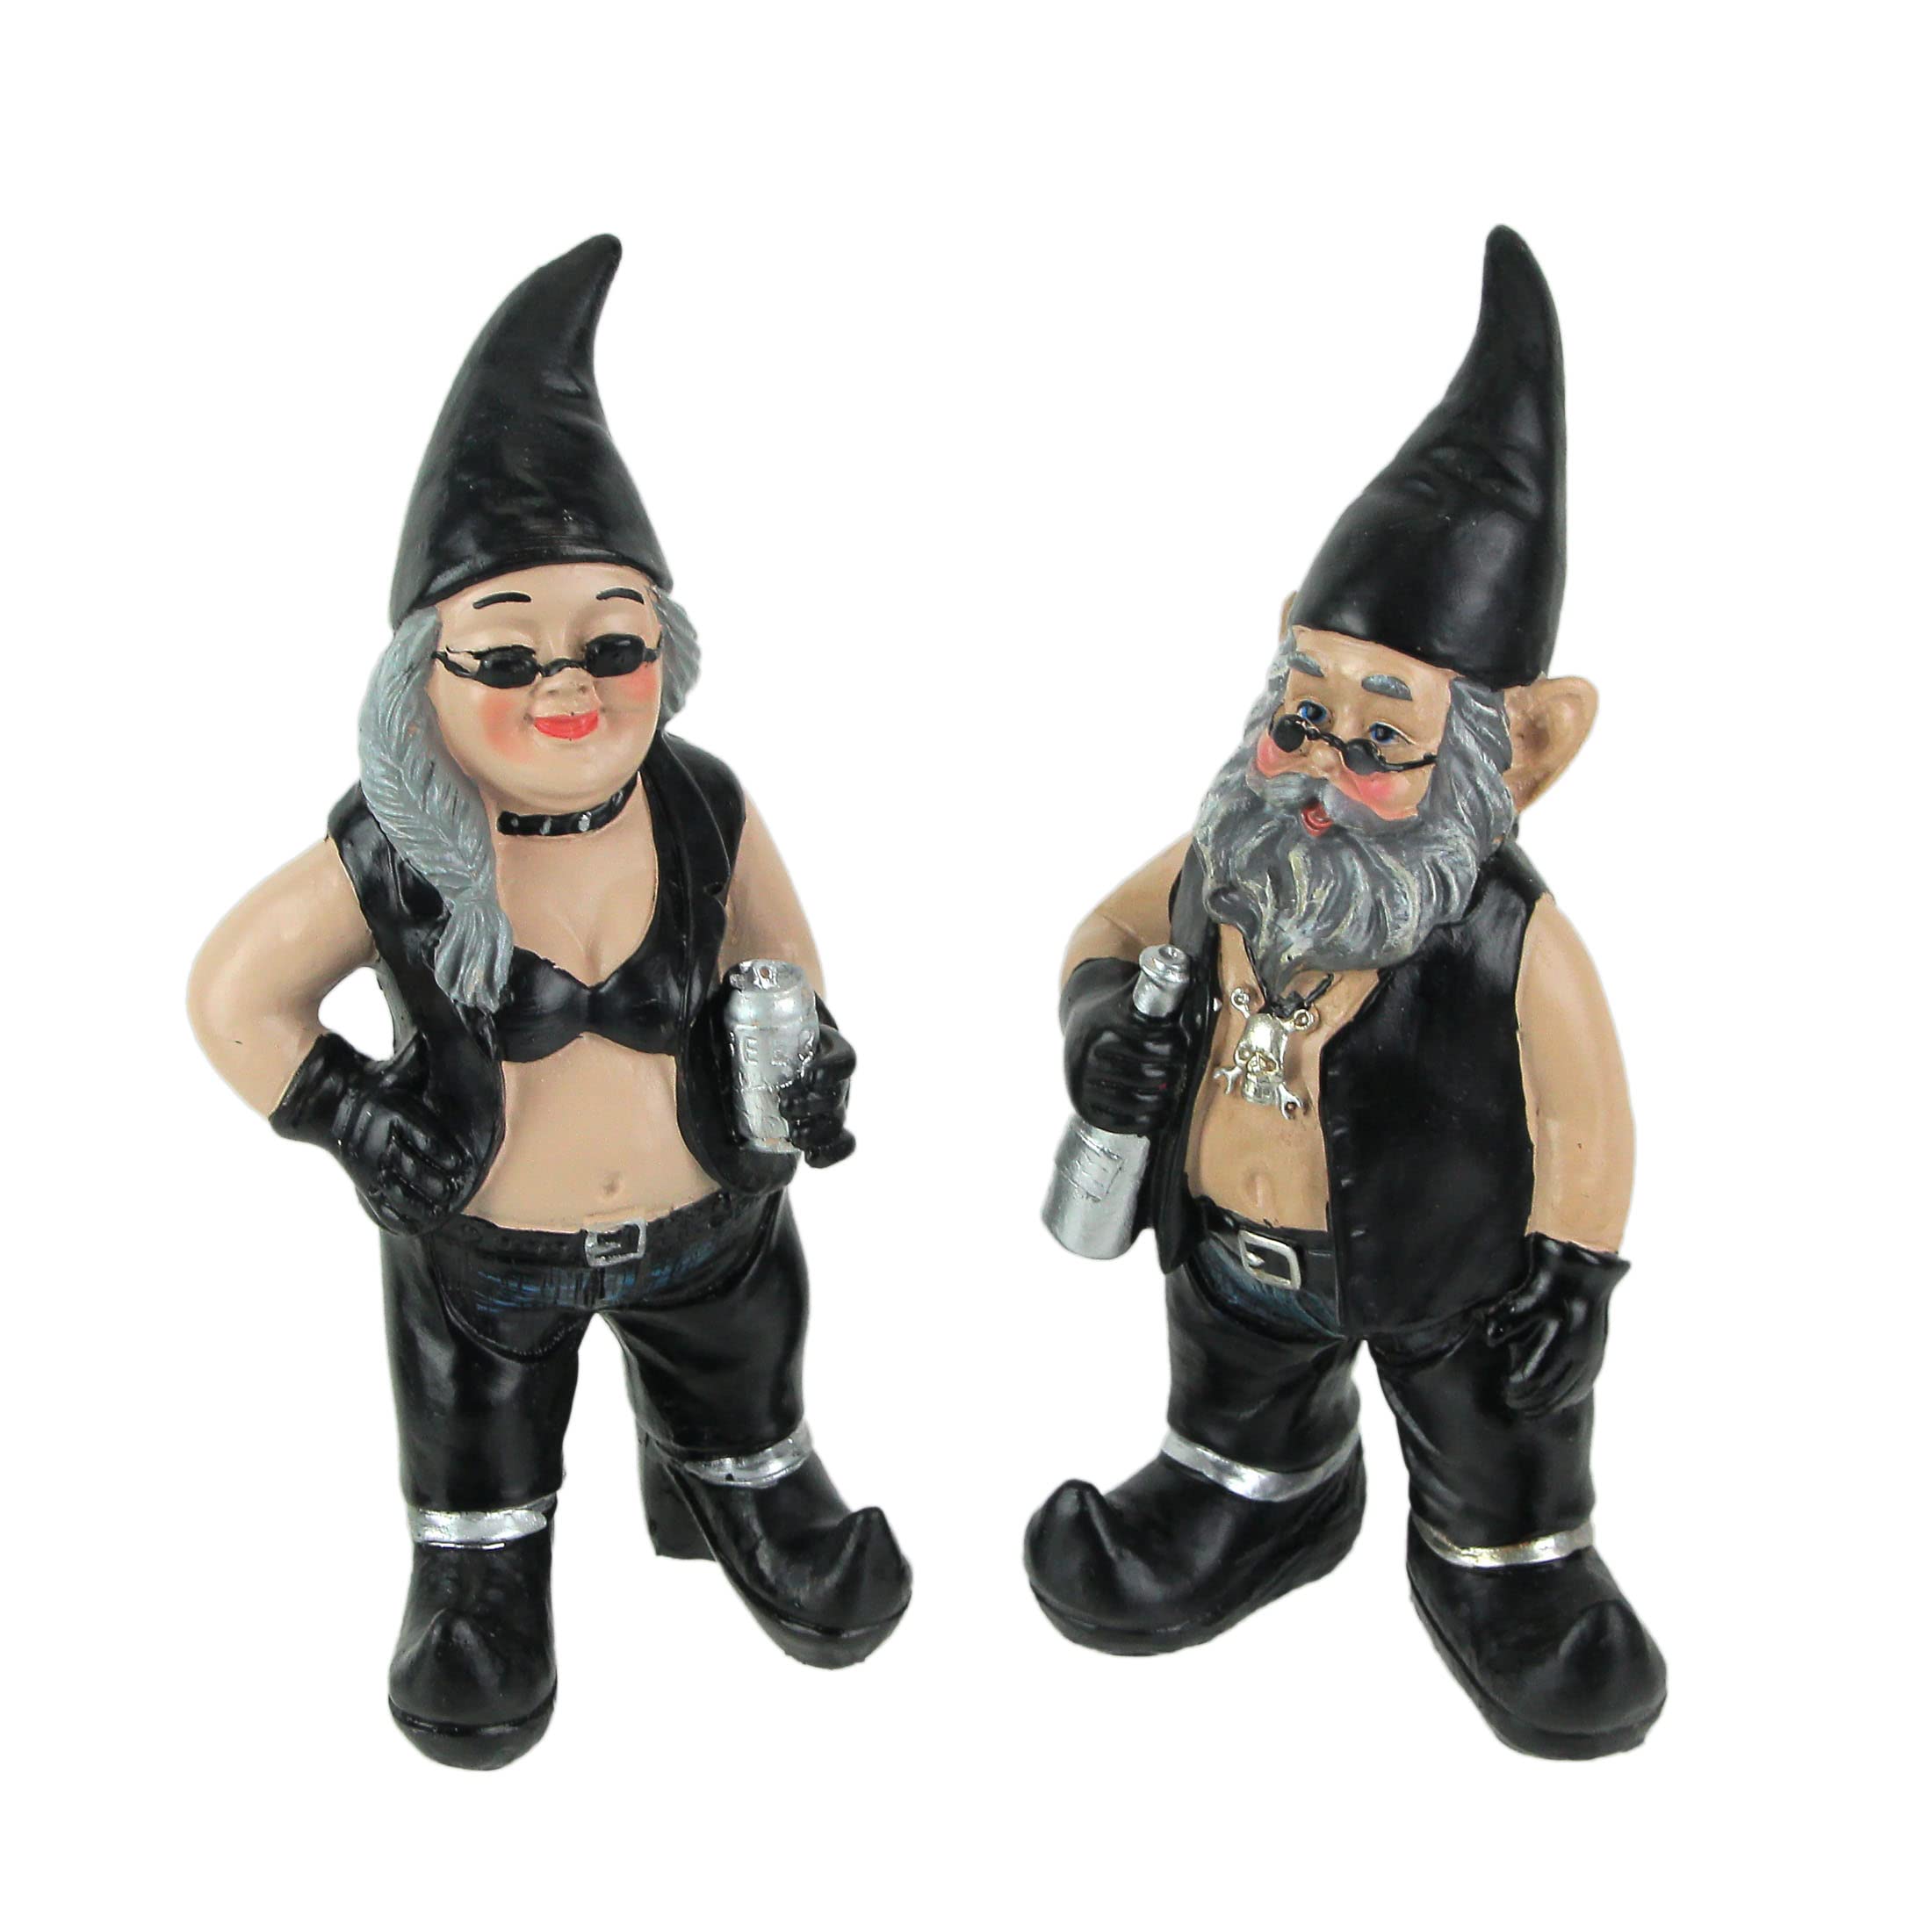 Zeckos Gnoschitt and Gnofun Thirsty Biker Garden Gnome Statues 7.5 Inches High Funny Indoor Outdoor Décor Figurines